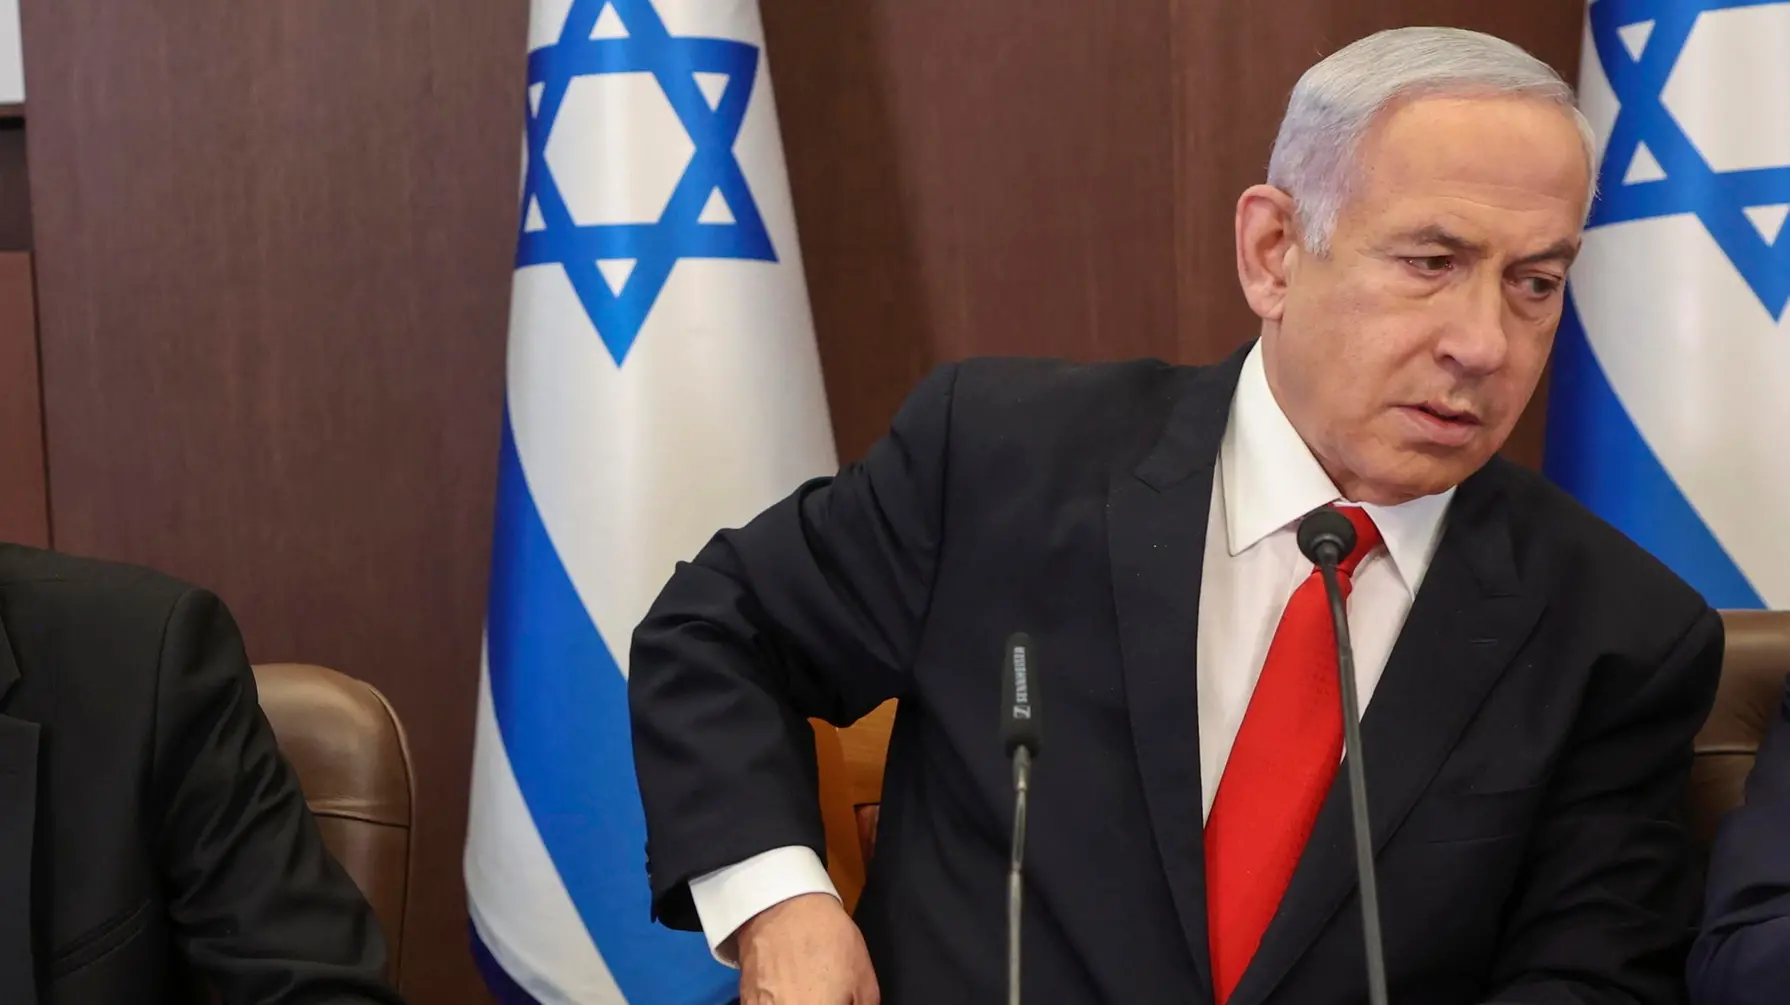 Guerra di Gaza, Netanyahu a Blinken: "L'operazione di Rafah non dipende dall'accordo sugli ostaggi"